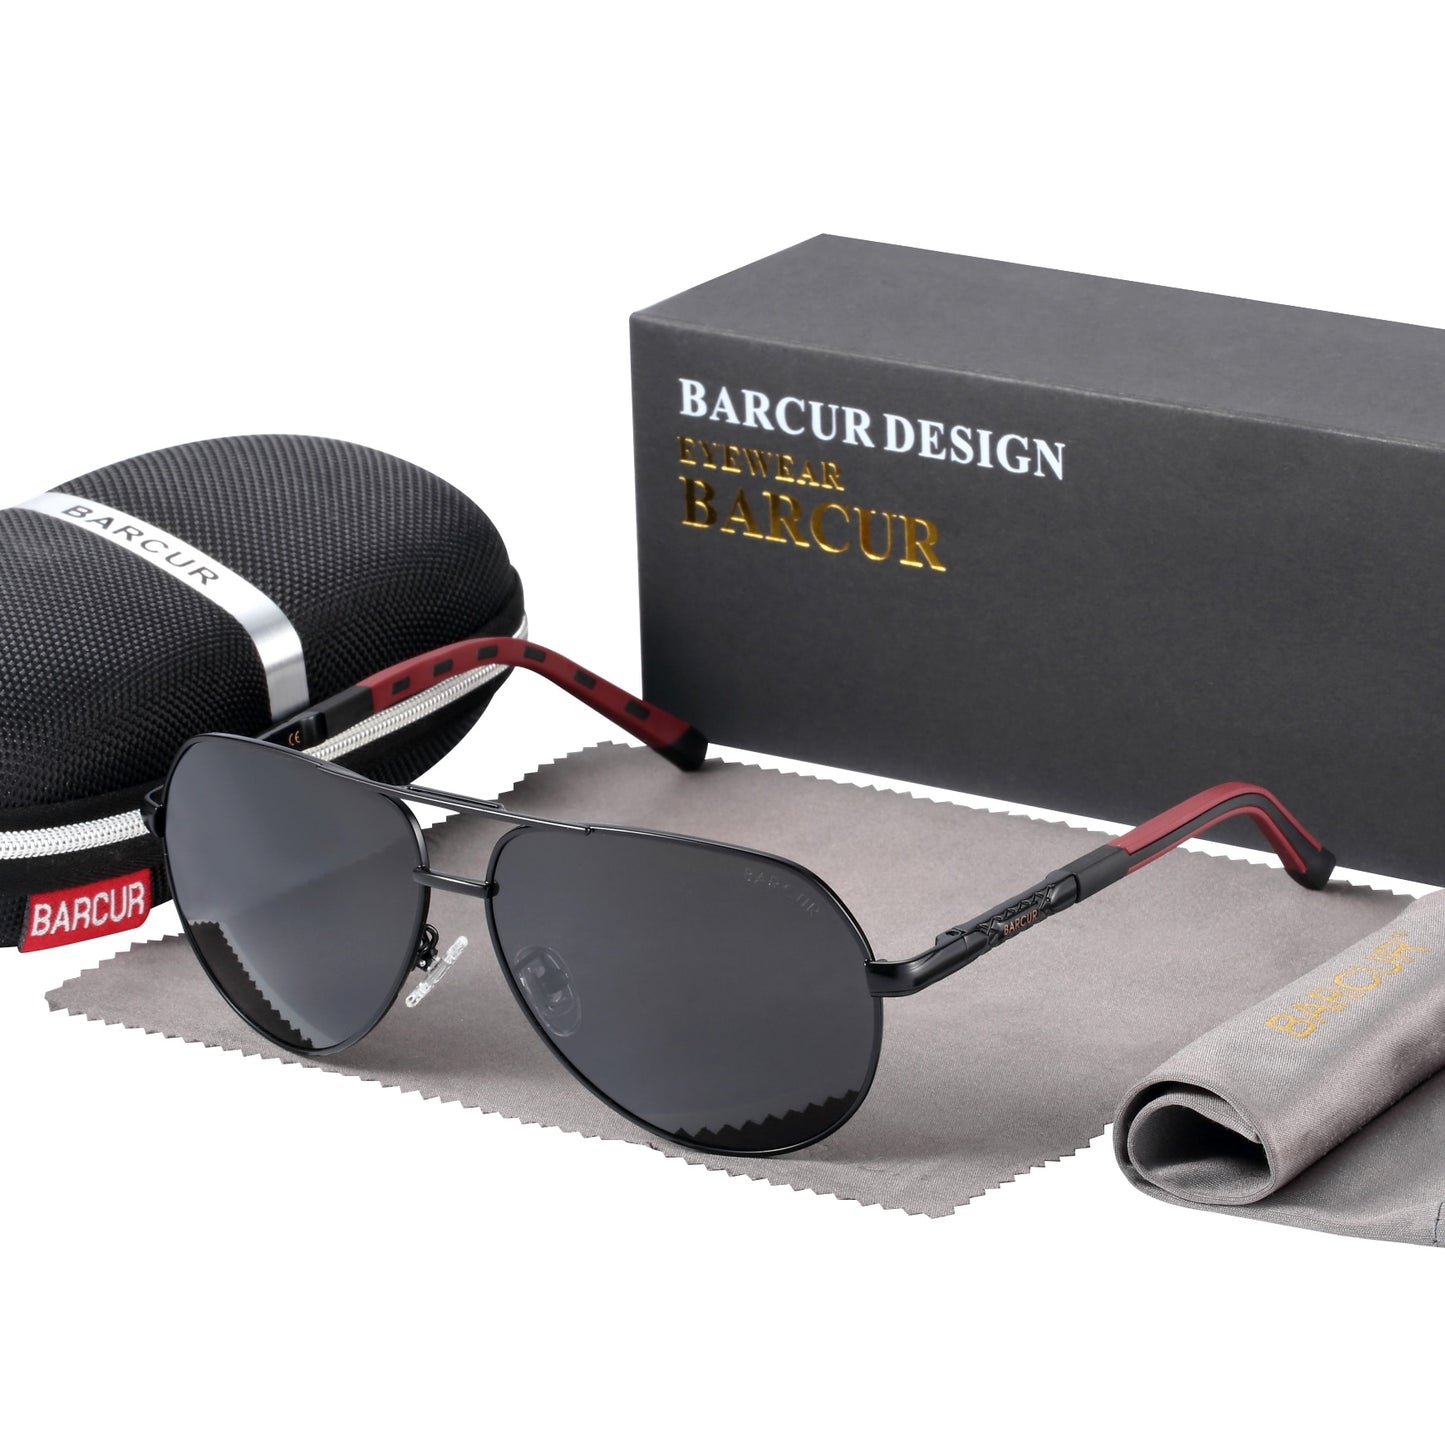 Full black with red side Barcur Vintage Aviator sunglasses